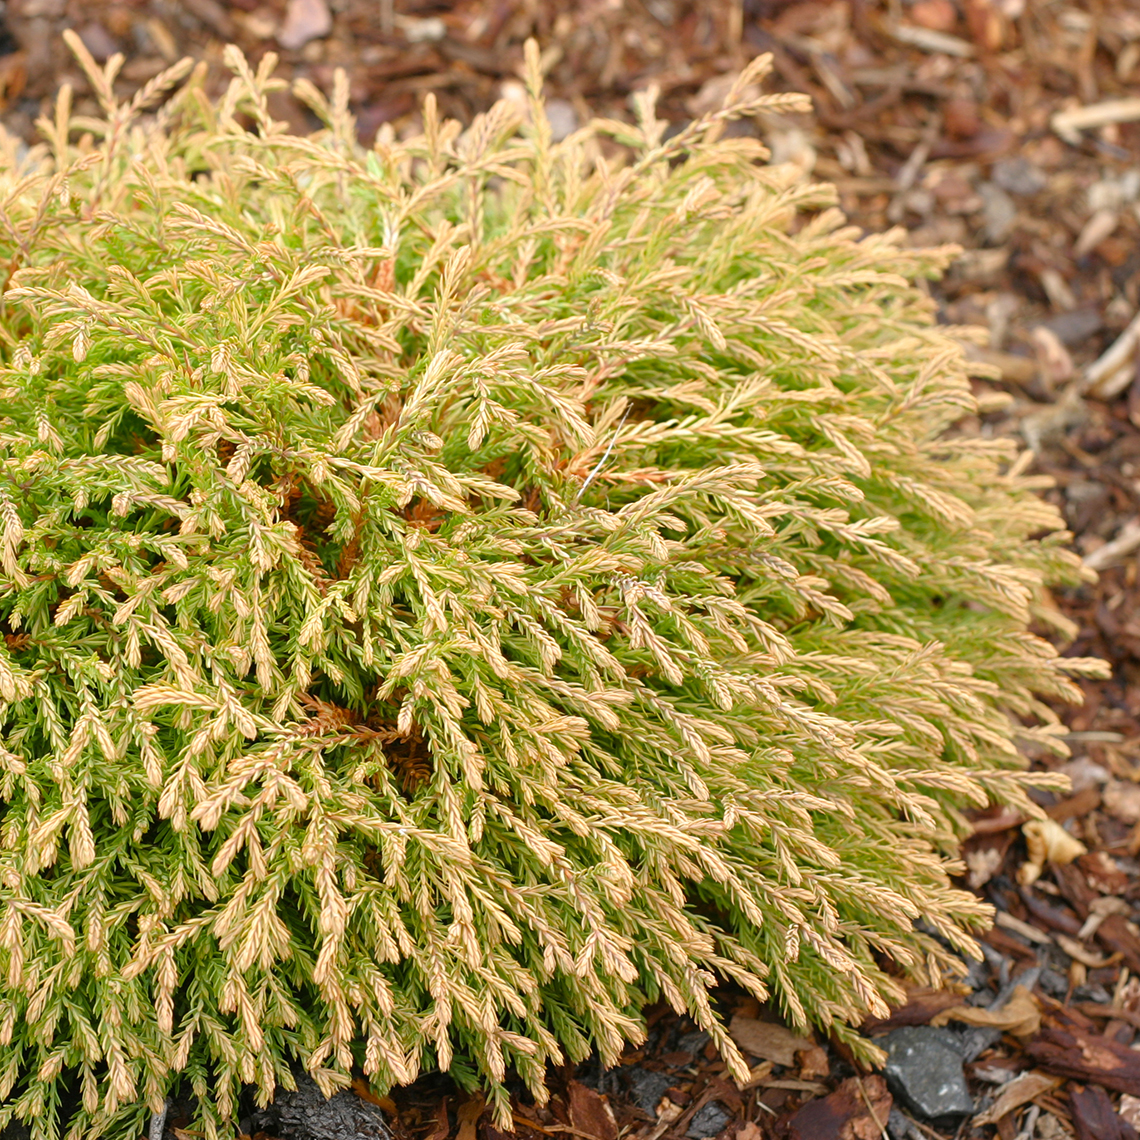 Closeup of the unique scale like golden foliage of Golden Tuffet arborvitae